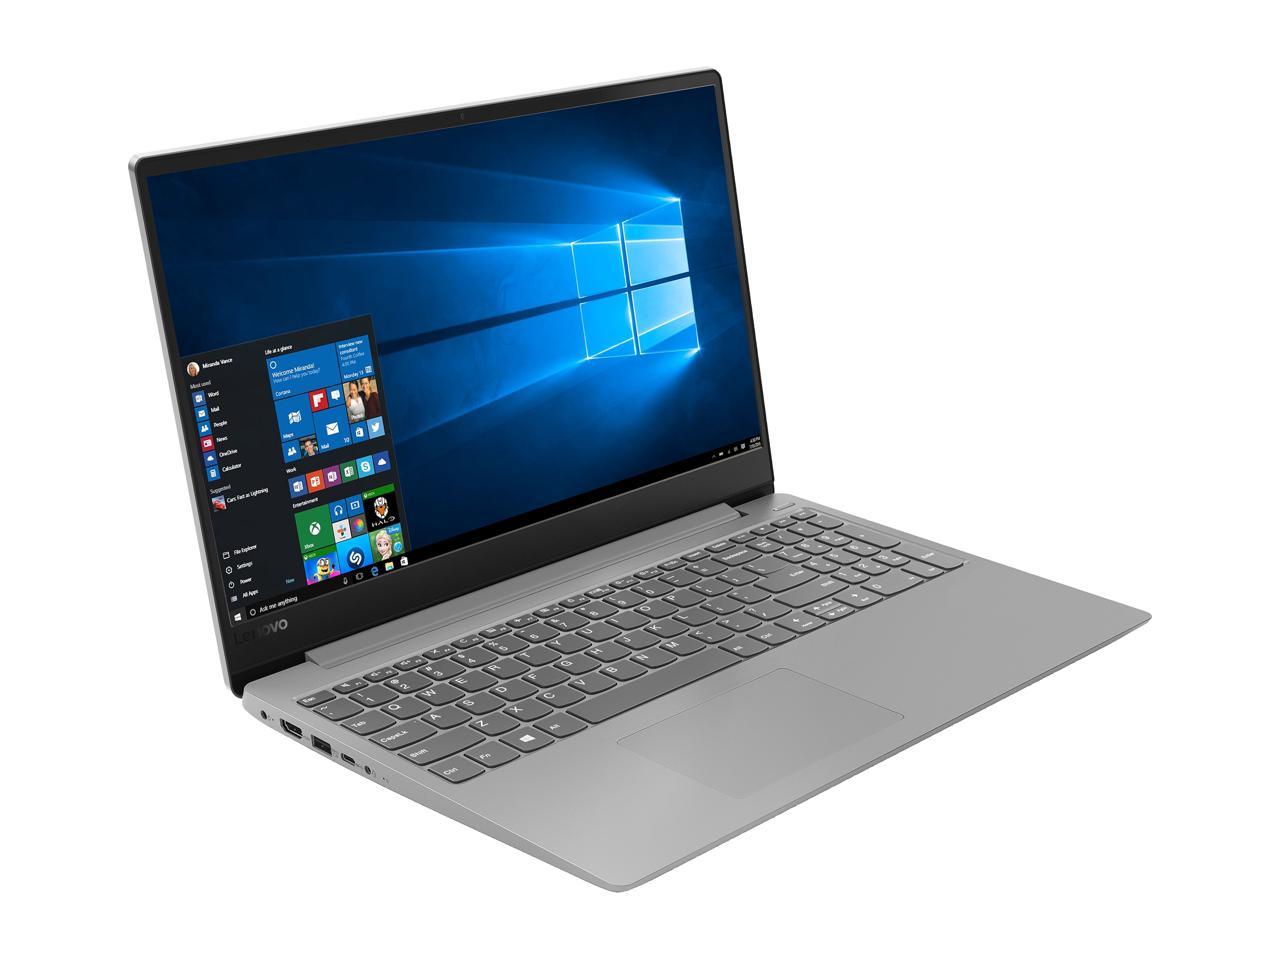 Lenovo Laptop IdeaPad 330s 81F5000EUS Intel Core i5 8th Gen 8250U (1.60 GHz) 8 GB Memory 256 GB SSD Intel UHD Graphics 620 15.6" Windows 10 Home 64-bit